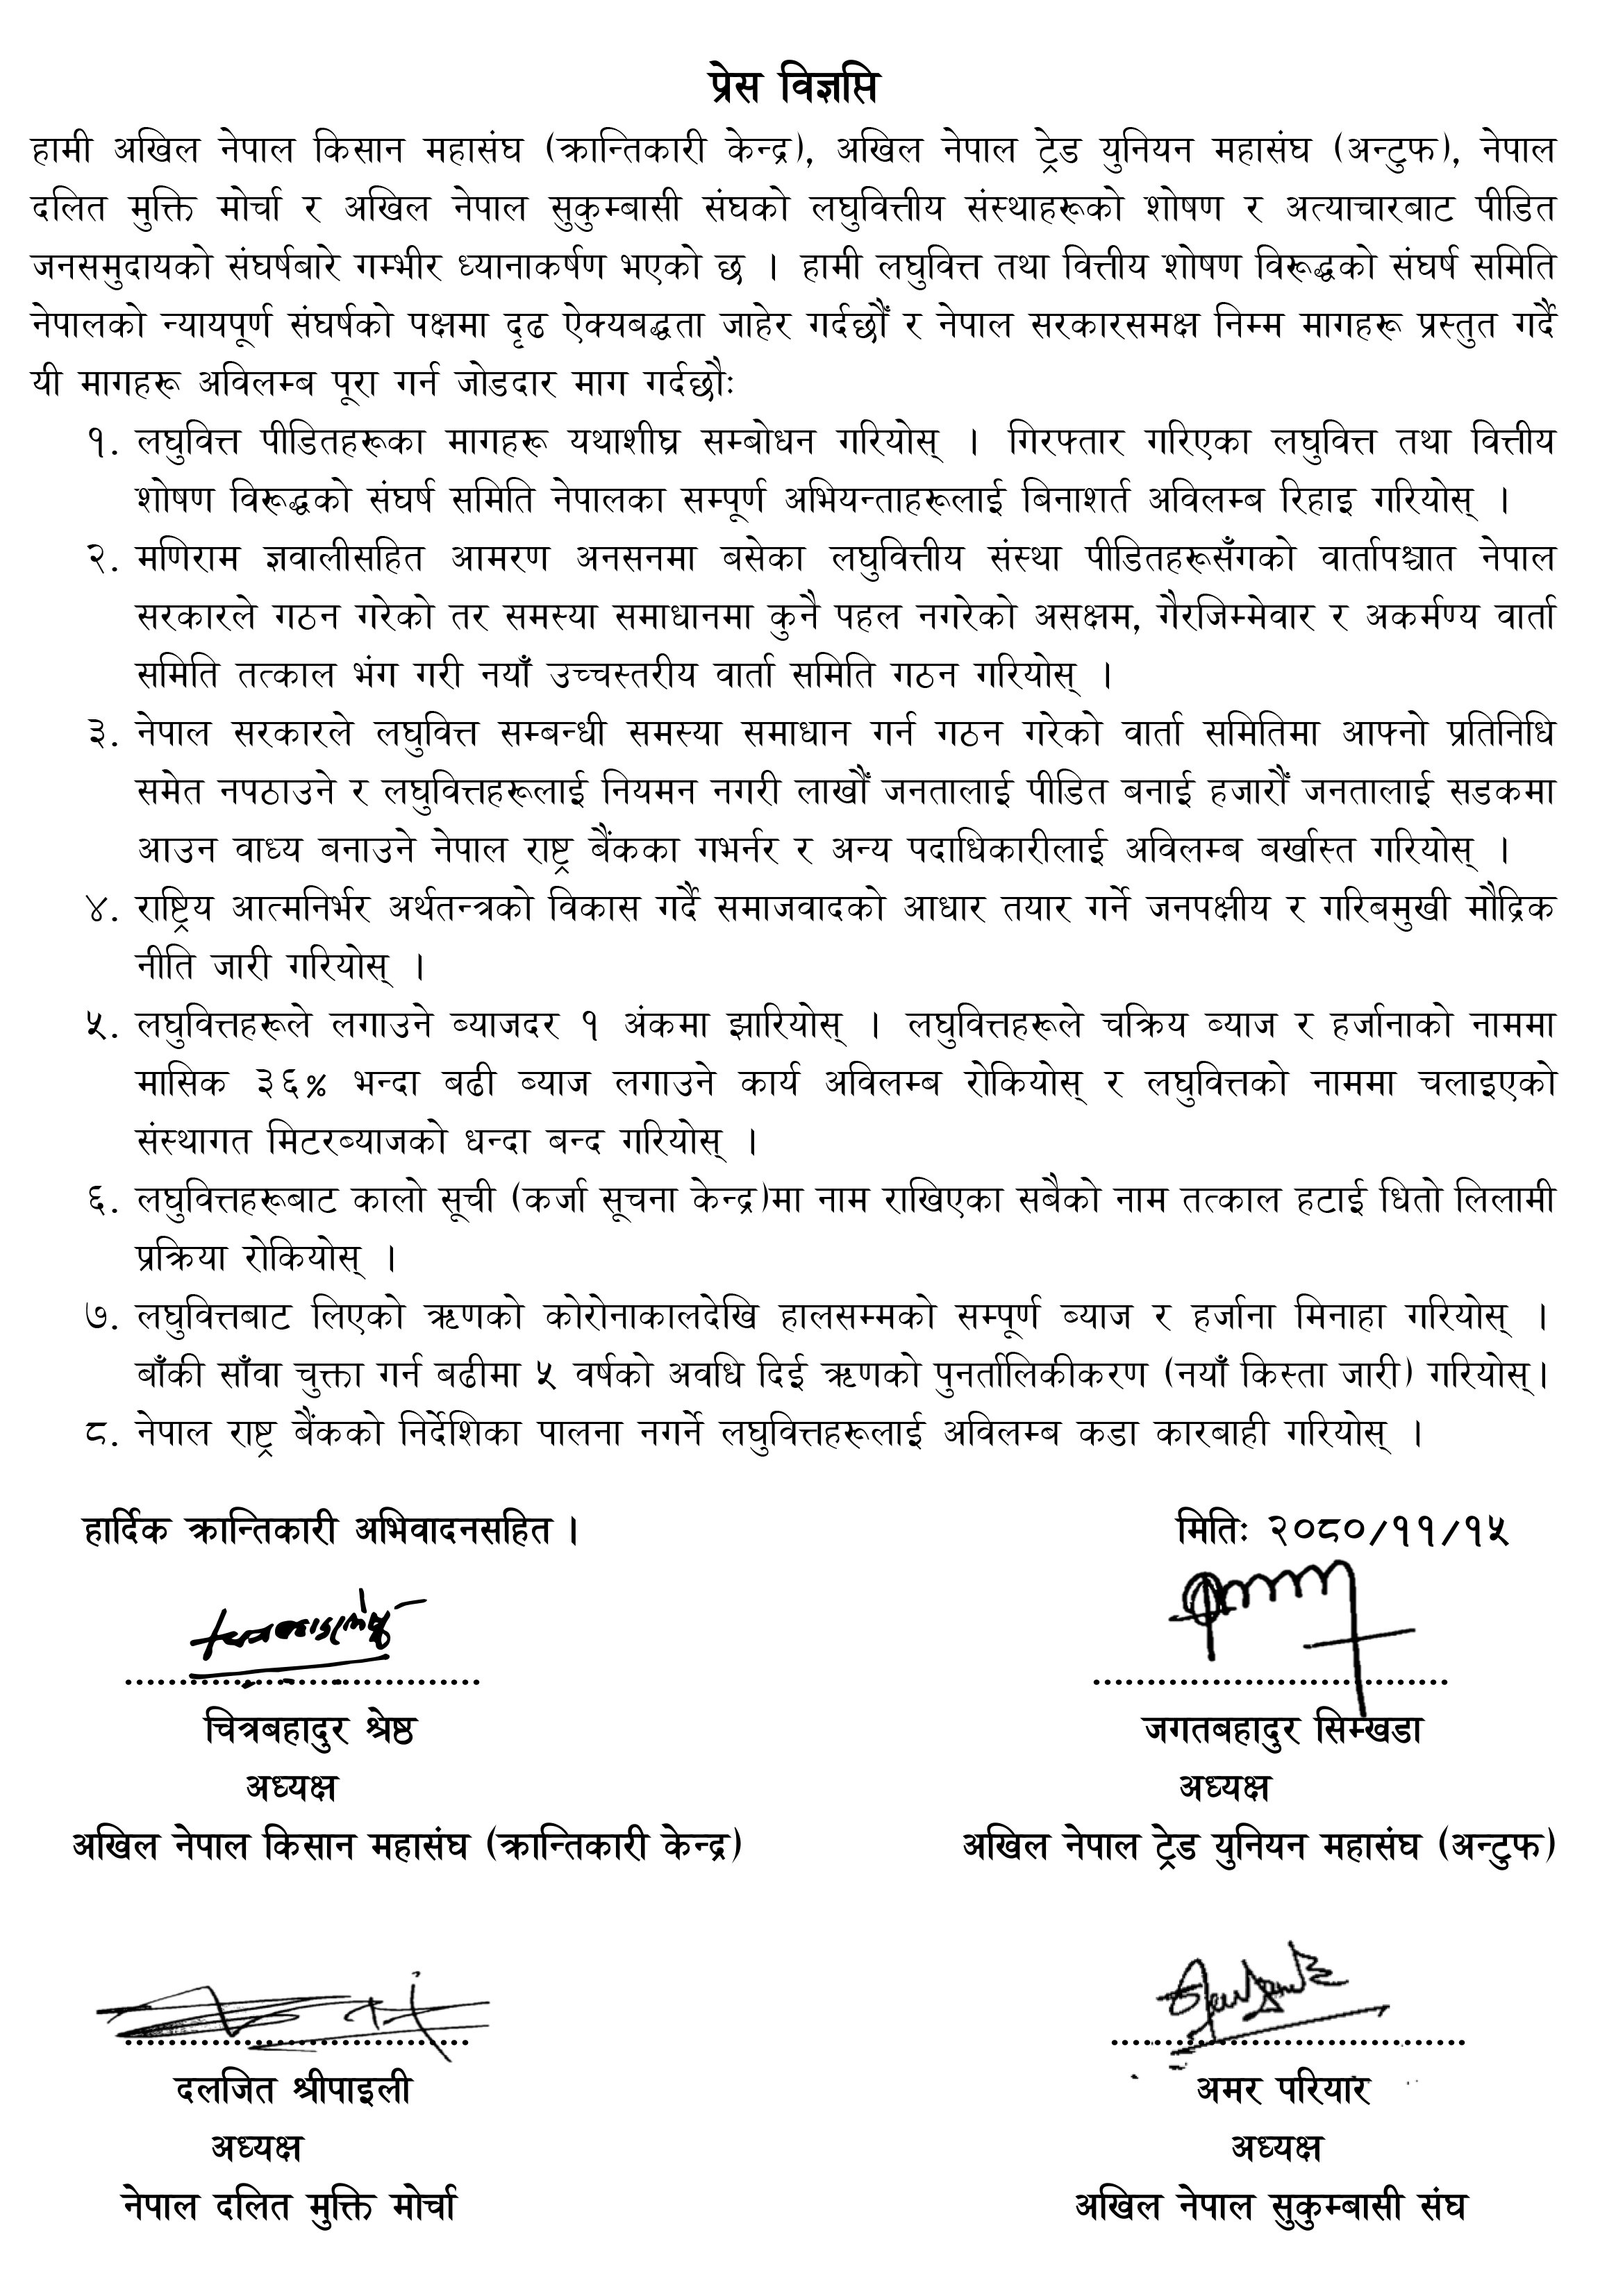 Press-Release--Maoist-4-Jabasa-2080-11-15